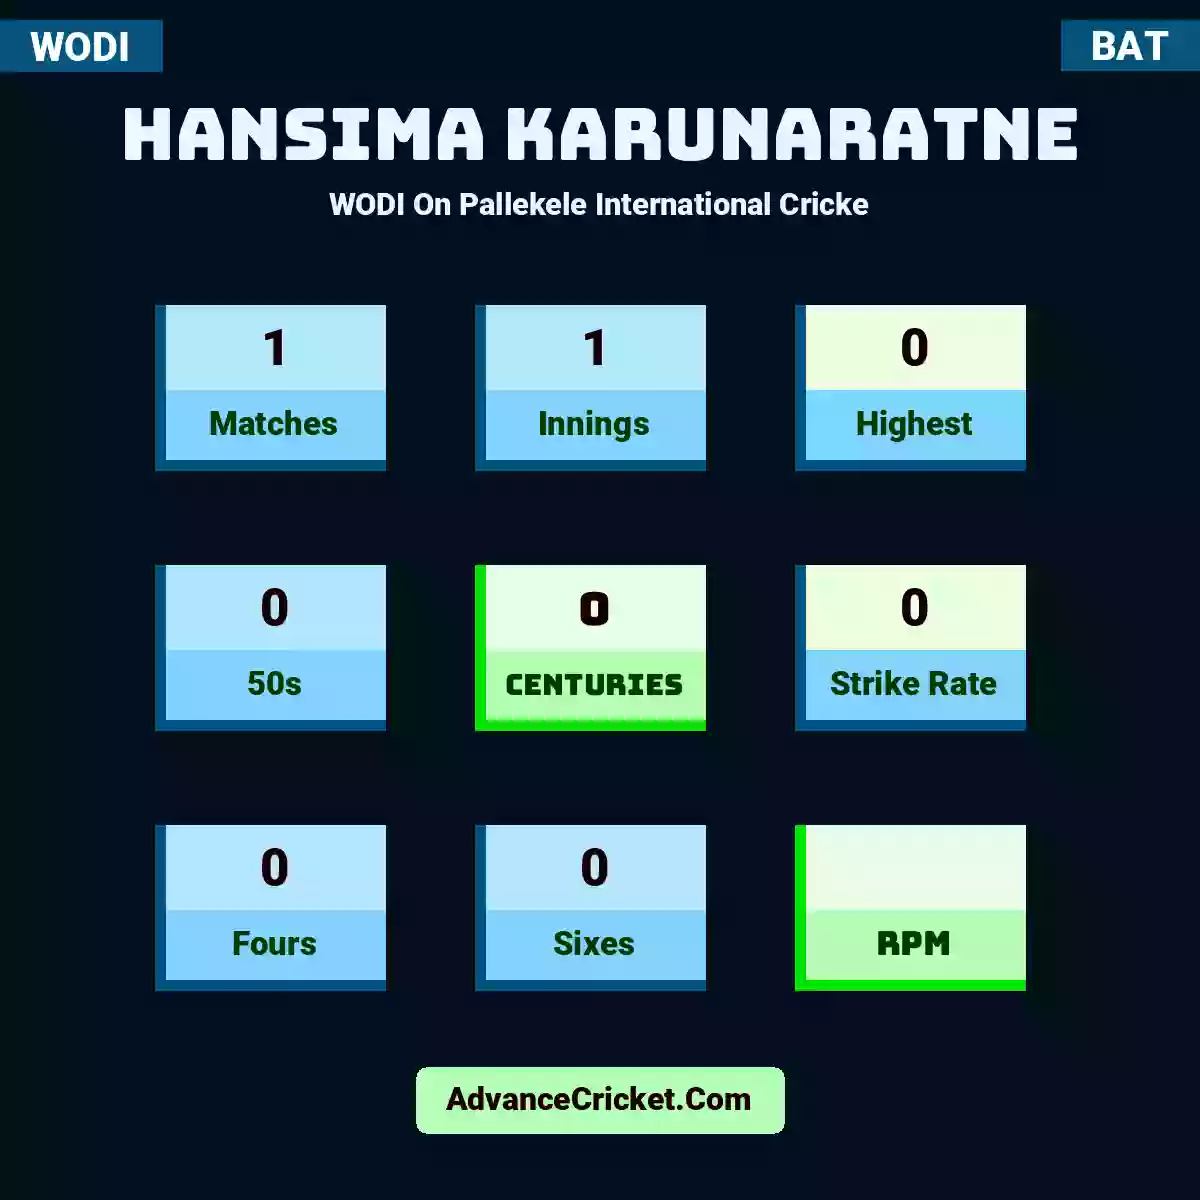 Hansima Karunaratne WODI  On Pallekele International Cricke, Hansima Karunaratne played 1 matches, scored 0 runs as highest, 0 half-centuries, and 0 centuries, with a strike rate of 0. H.Karunaratne hit 0 fours and 0 sixes.